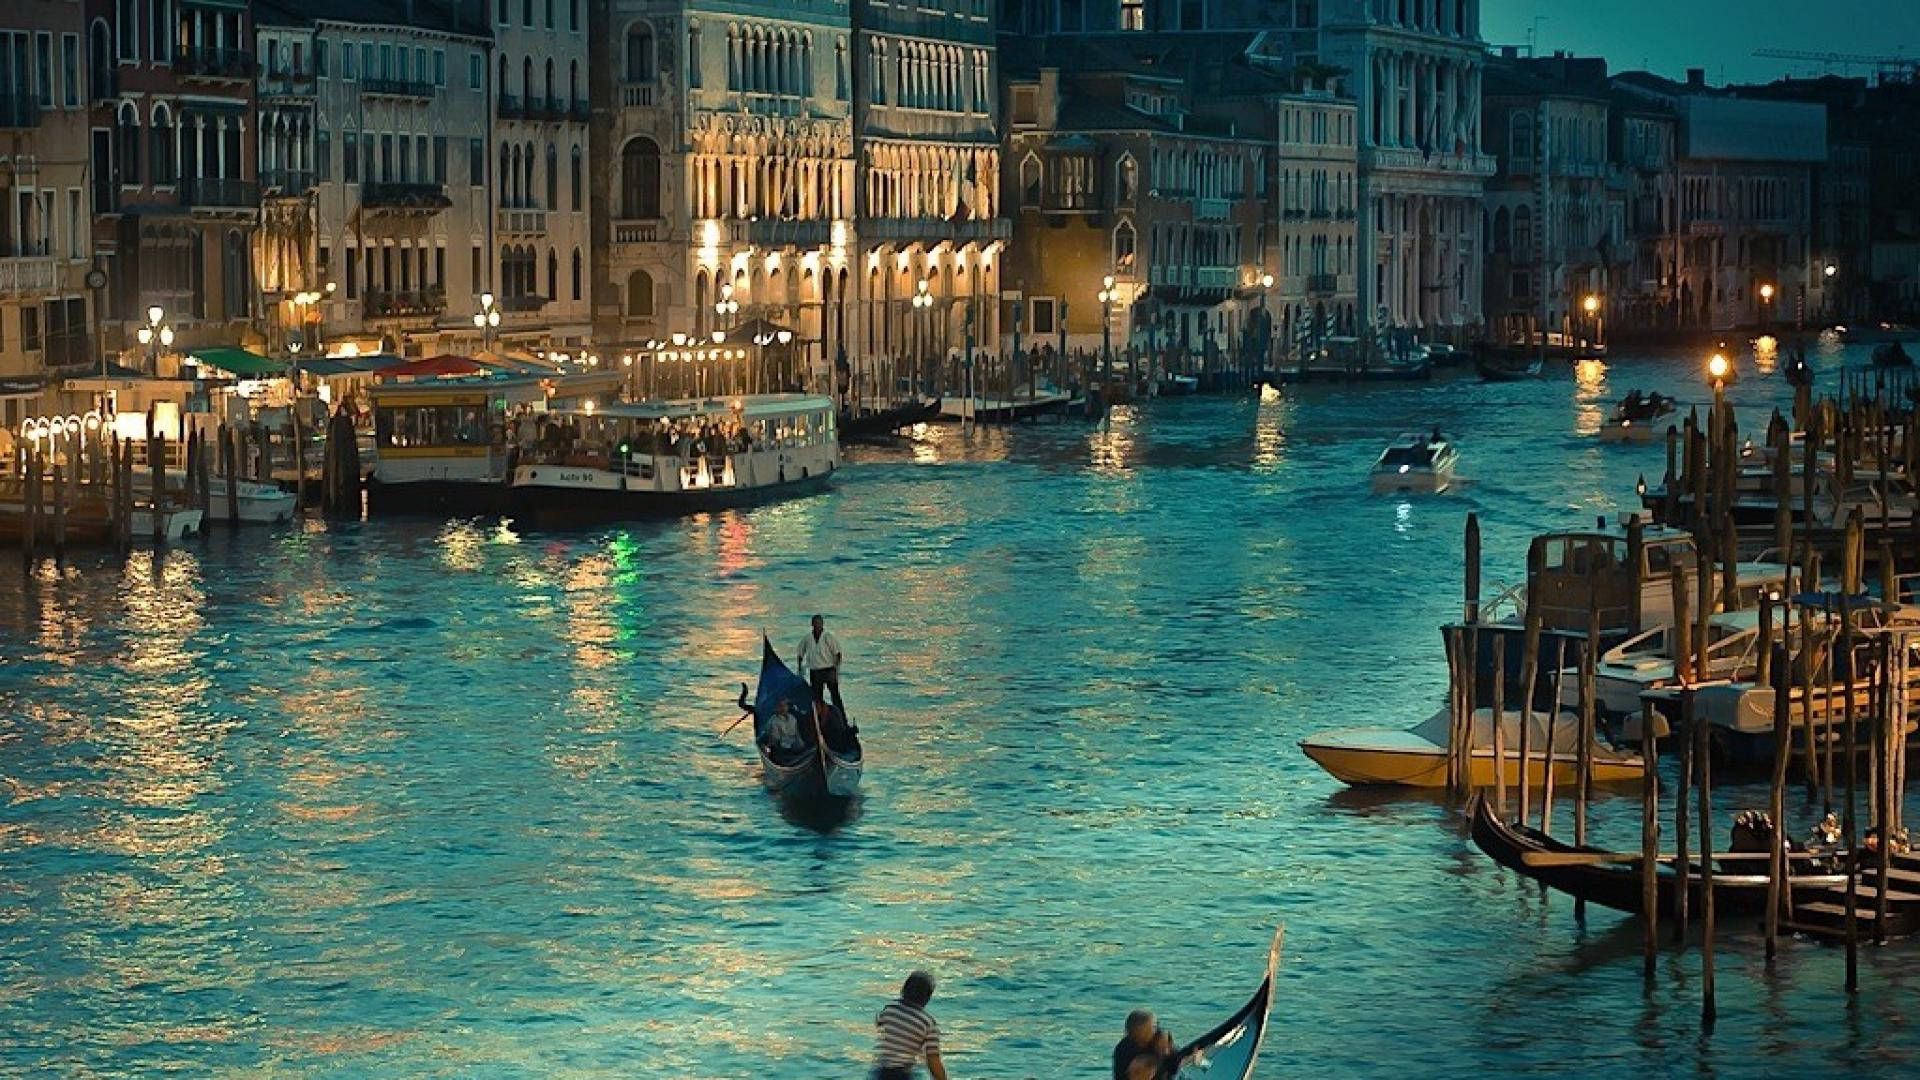 Download Vintage Venice Italy Wallpaper